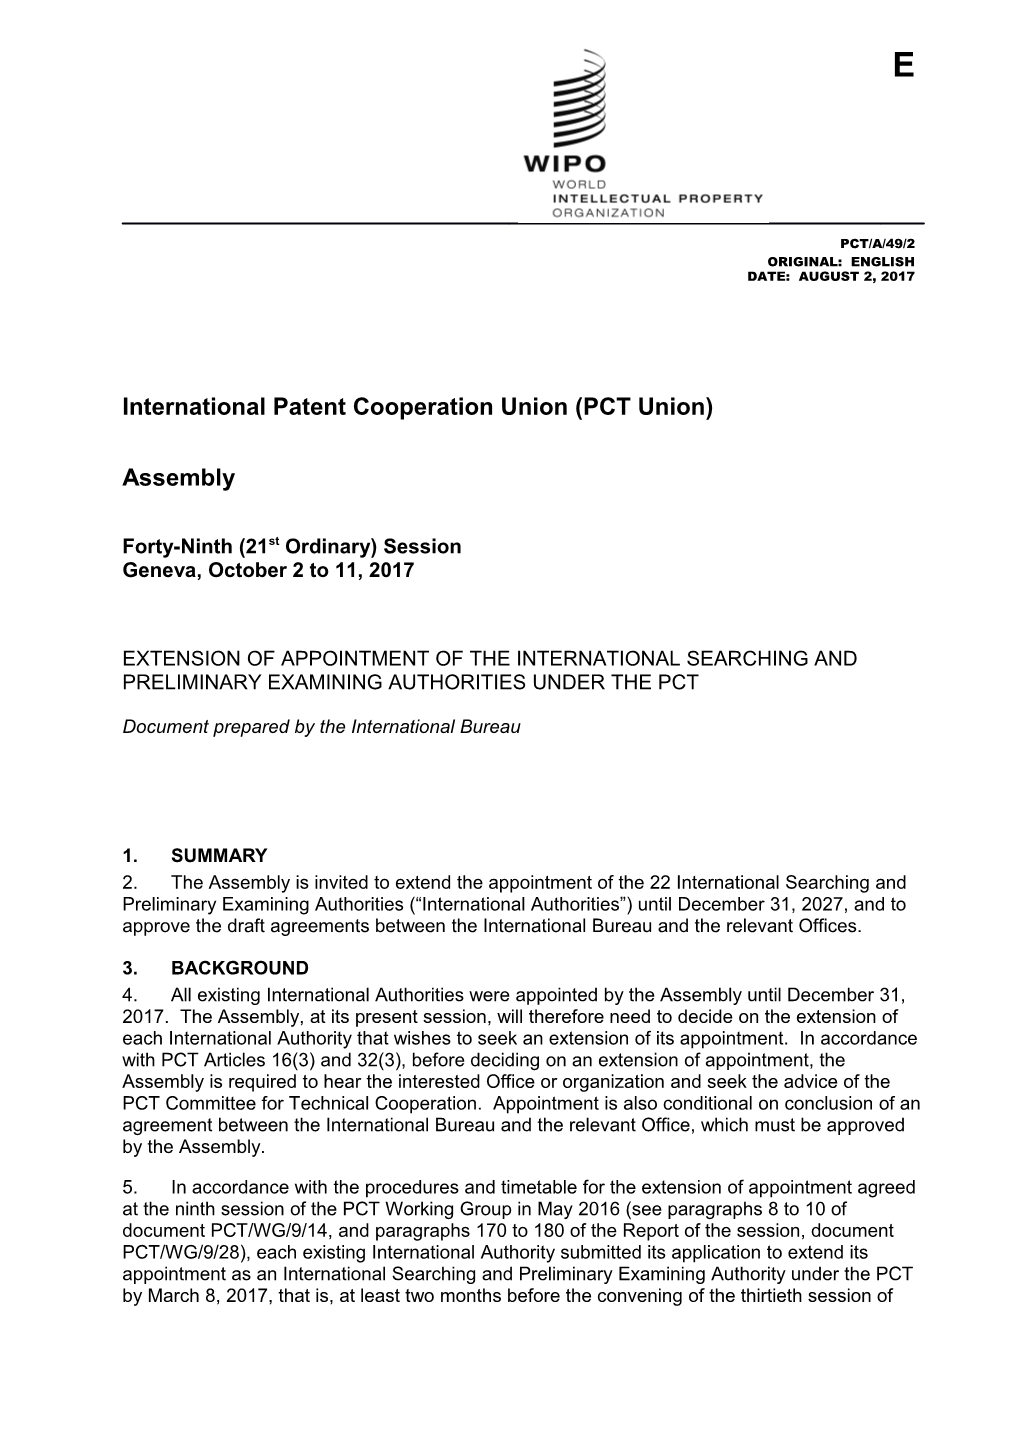 International Patent Cooperation Union (PCT Union) s3